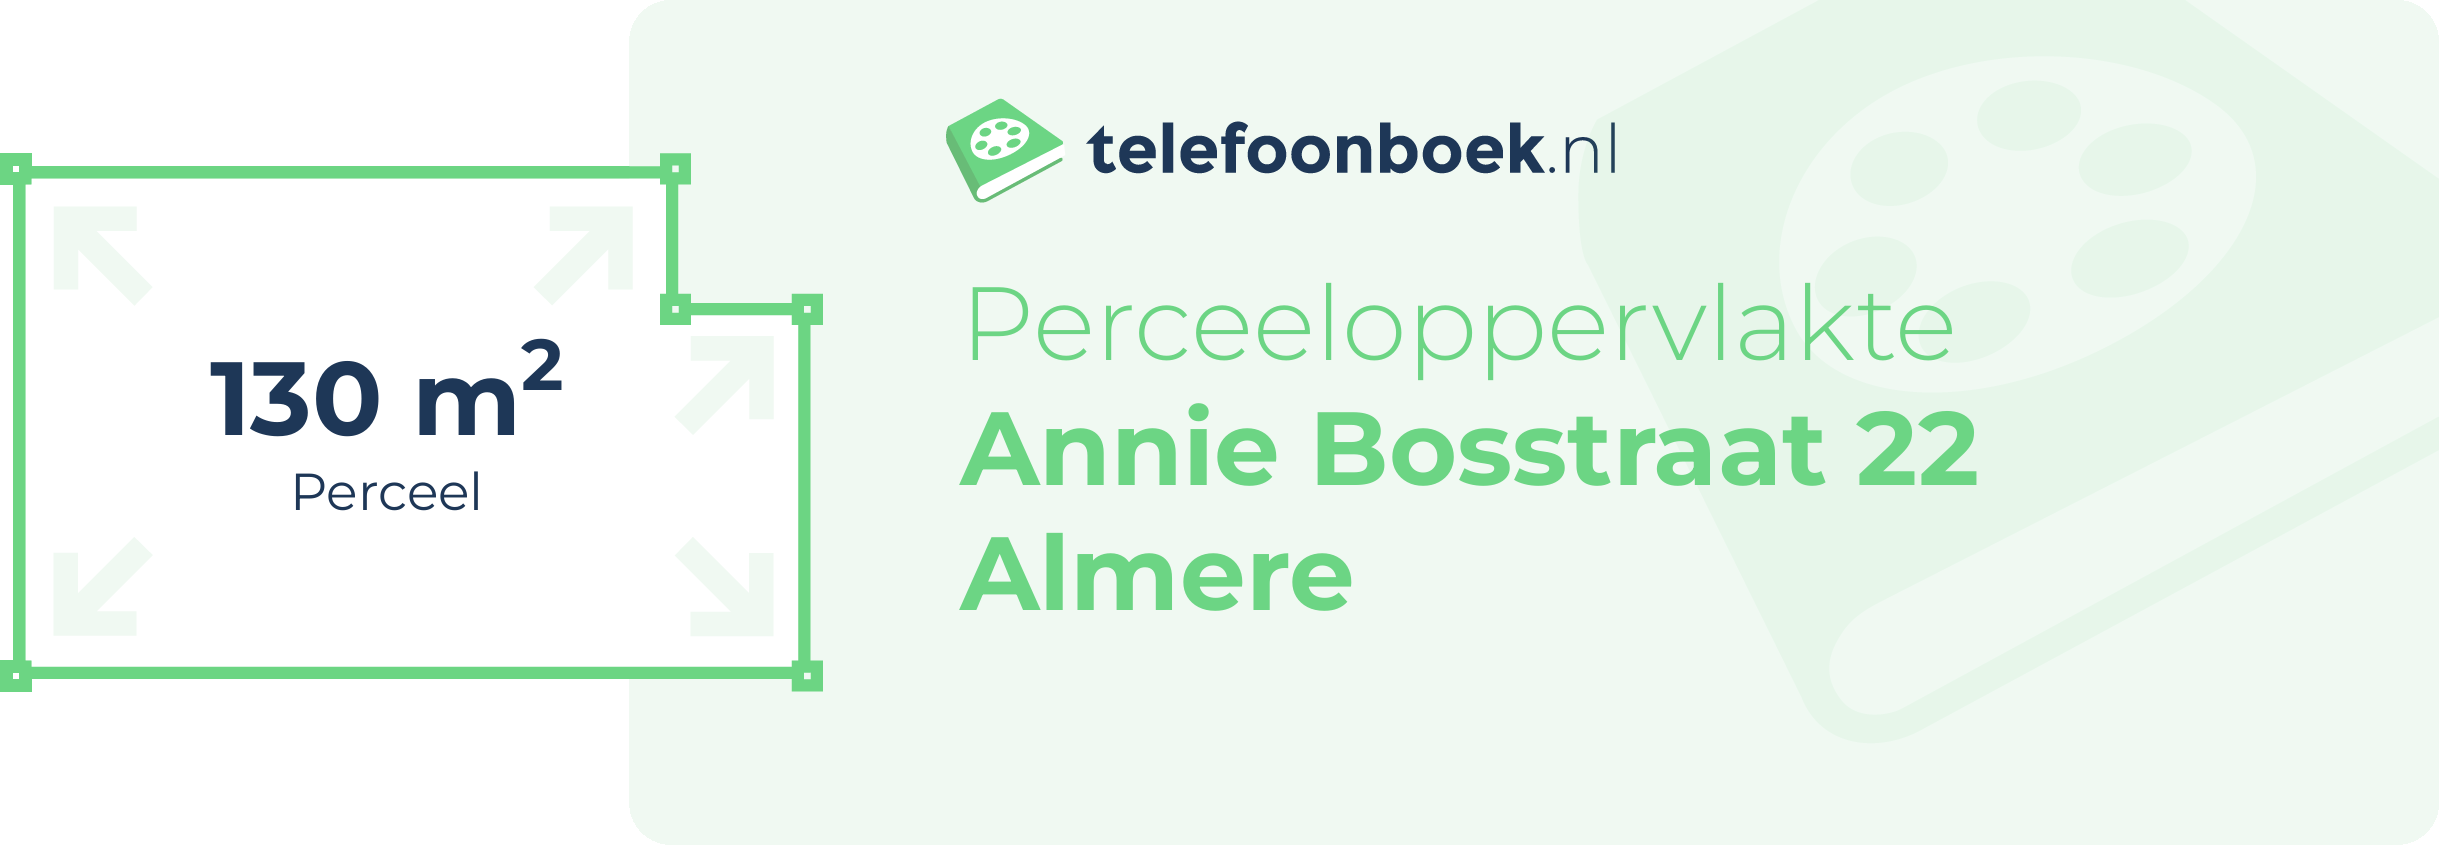 Perceeloppervlakte Annie Bosstraat 22 Almere